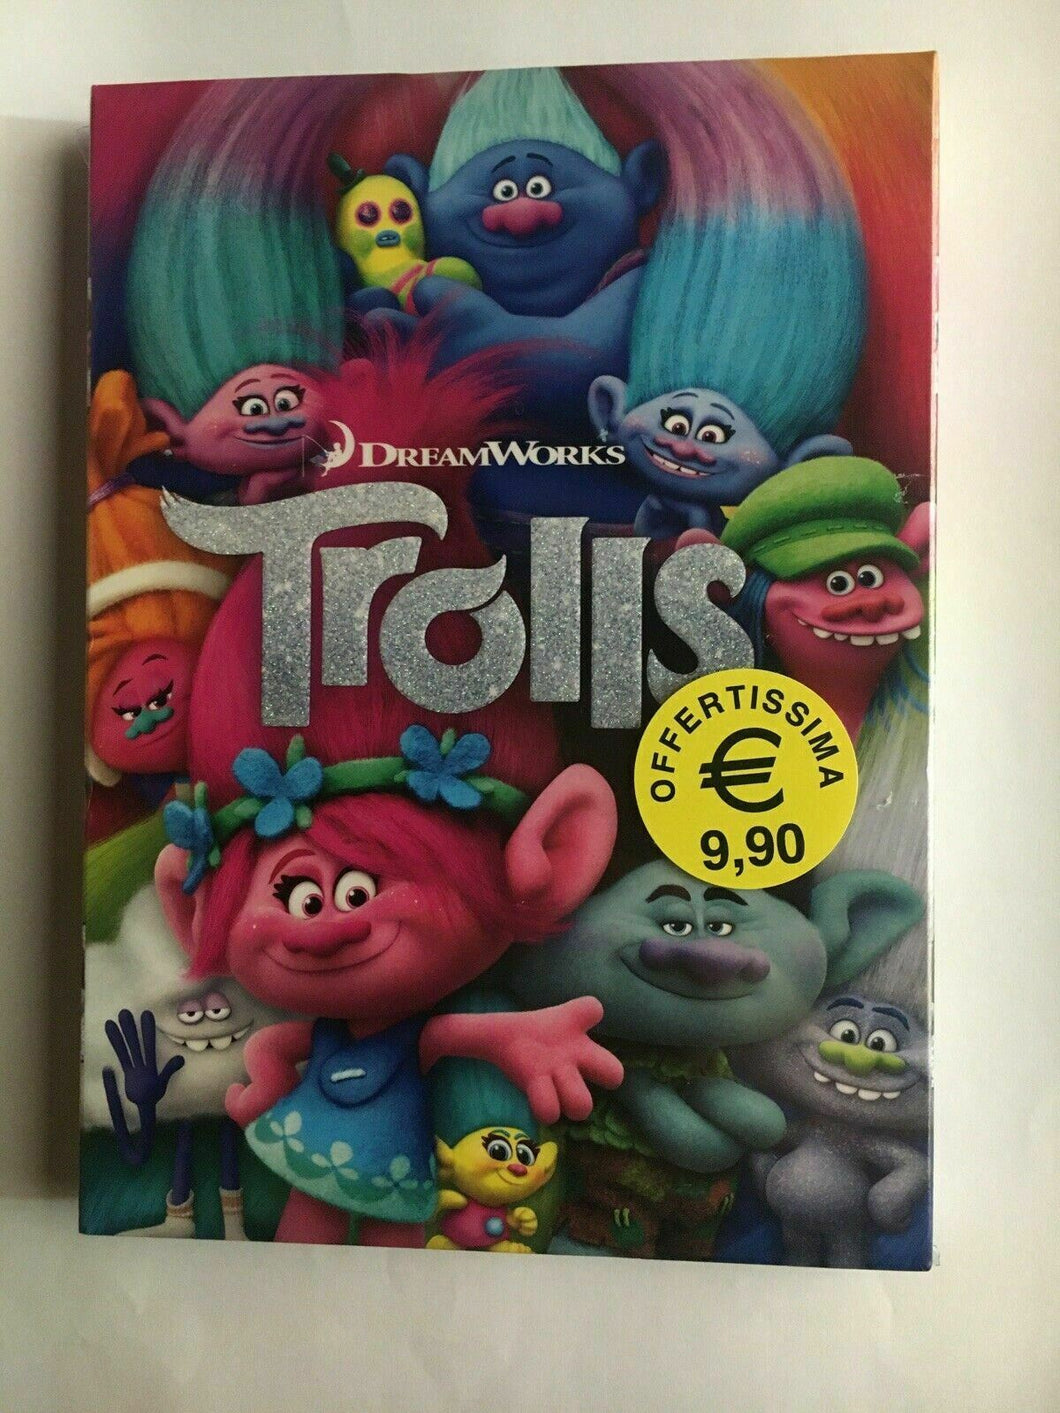 Trolls DVD